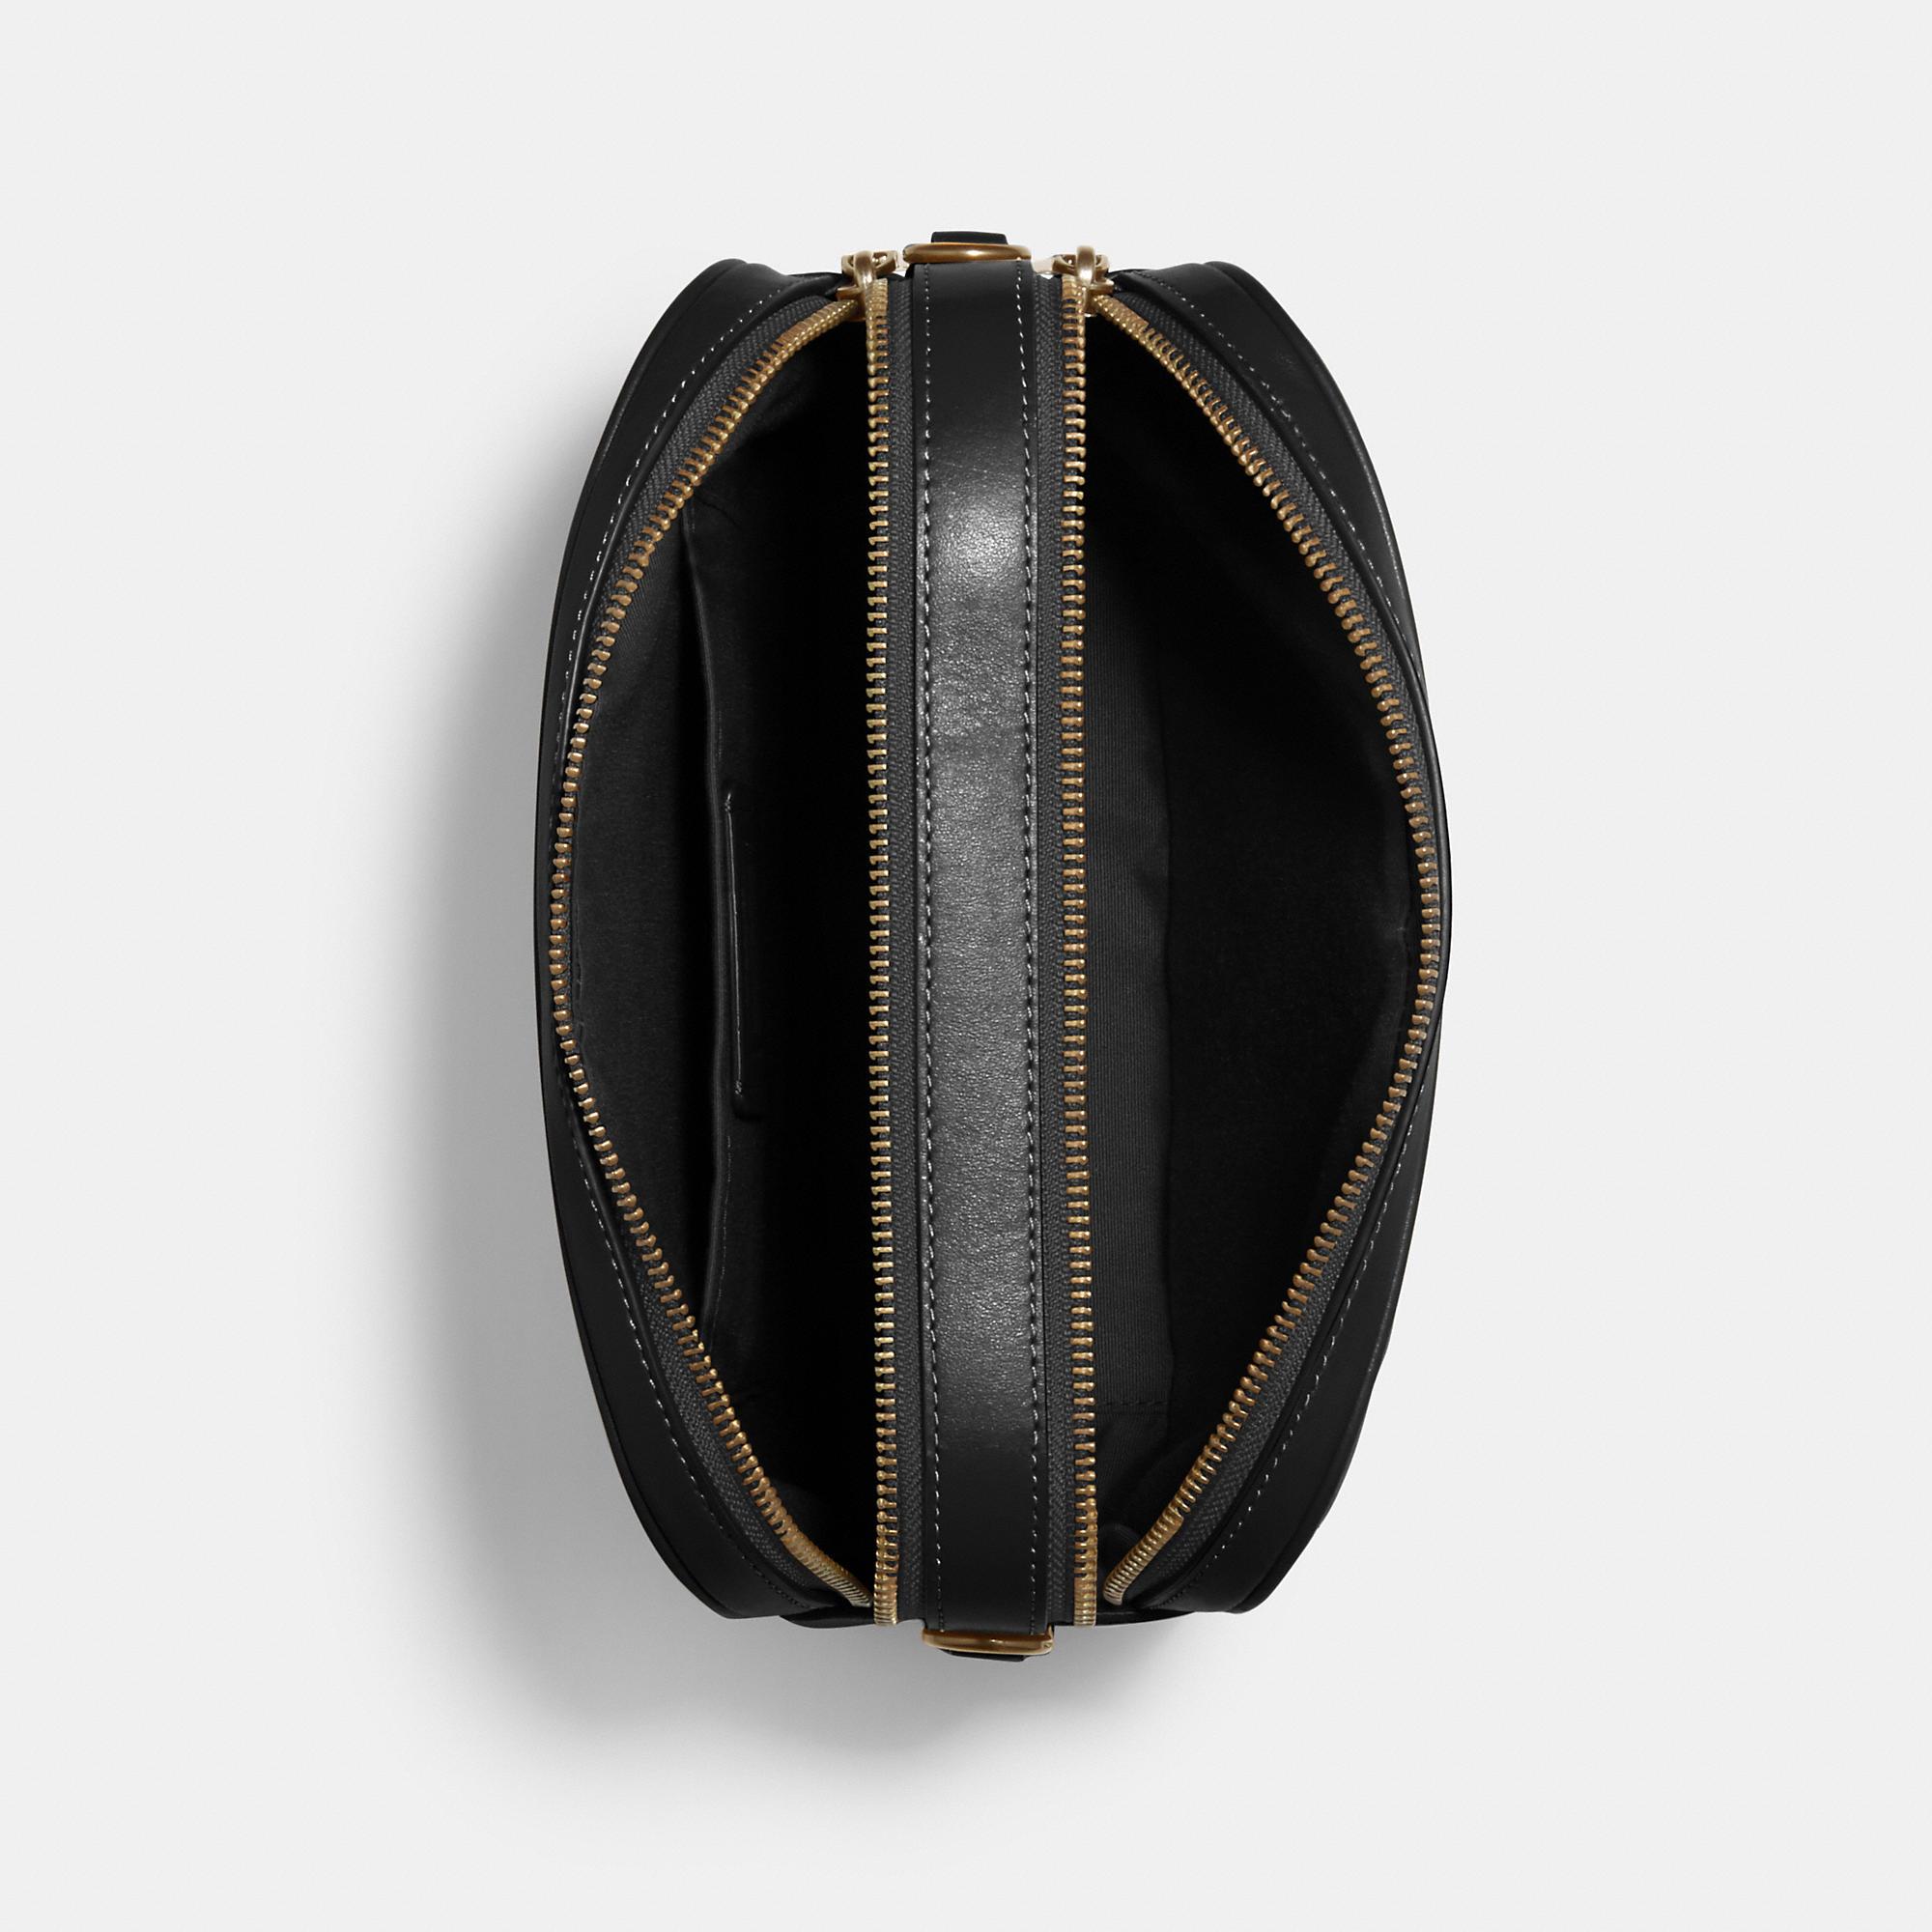 NWT Coach Domed Black Leather Handbag  Black leather handbags, Leather  handbags, Black leather